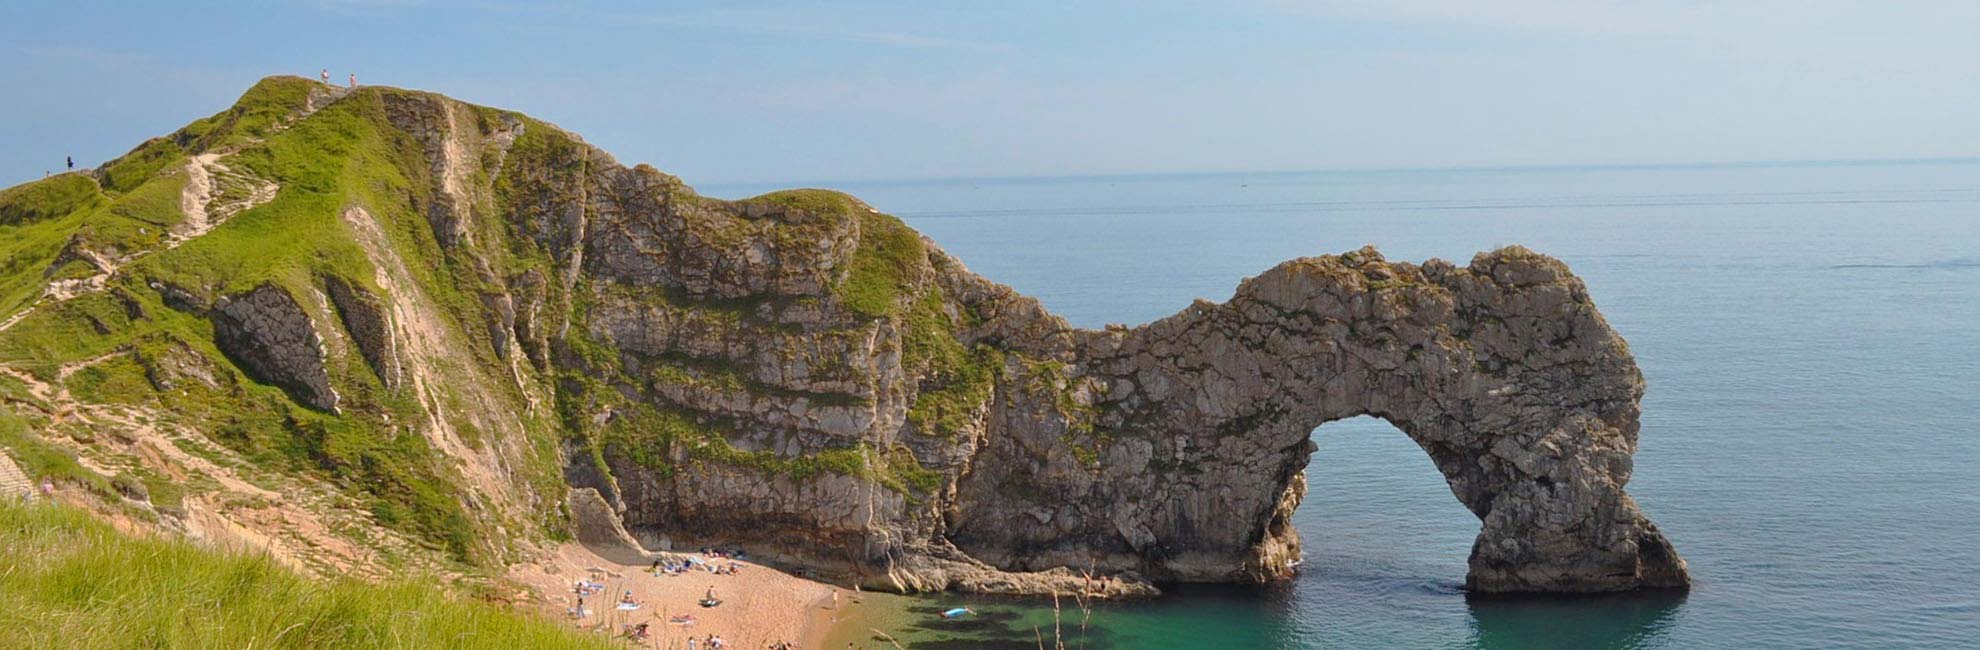 The spectacular scenery of Durdle Door on the Dorset coast